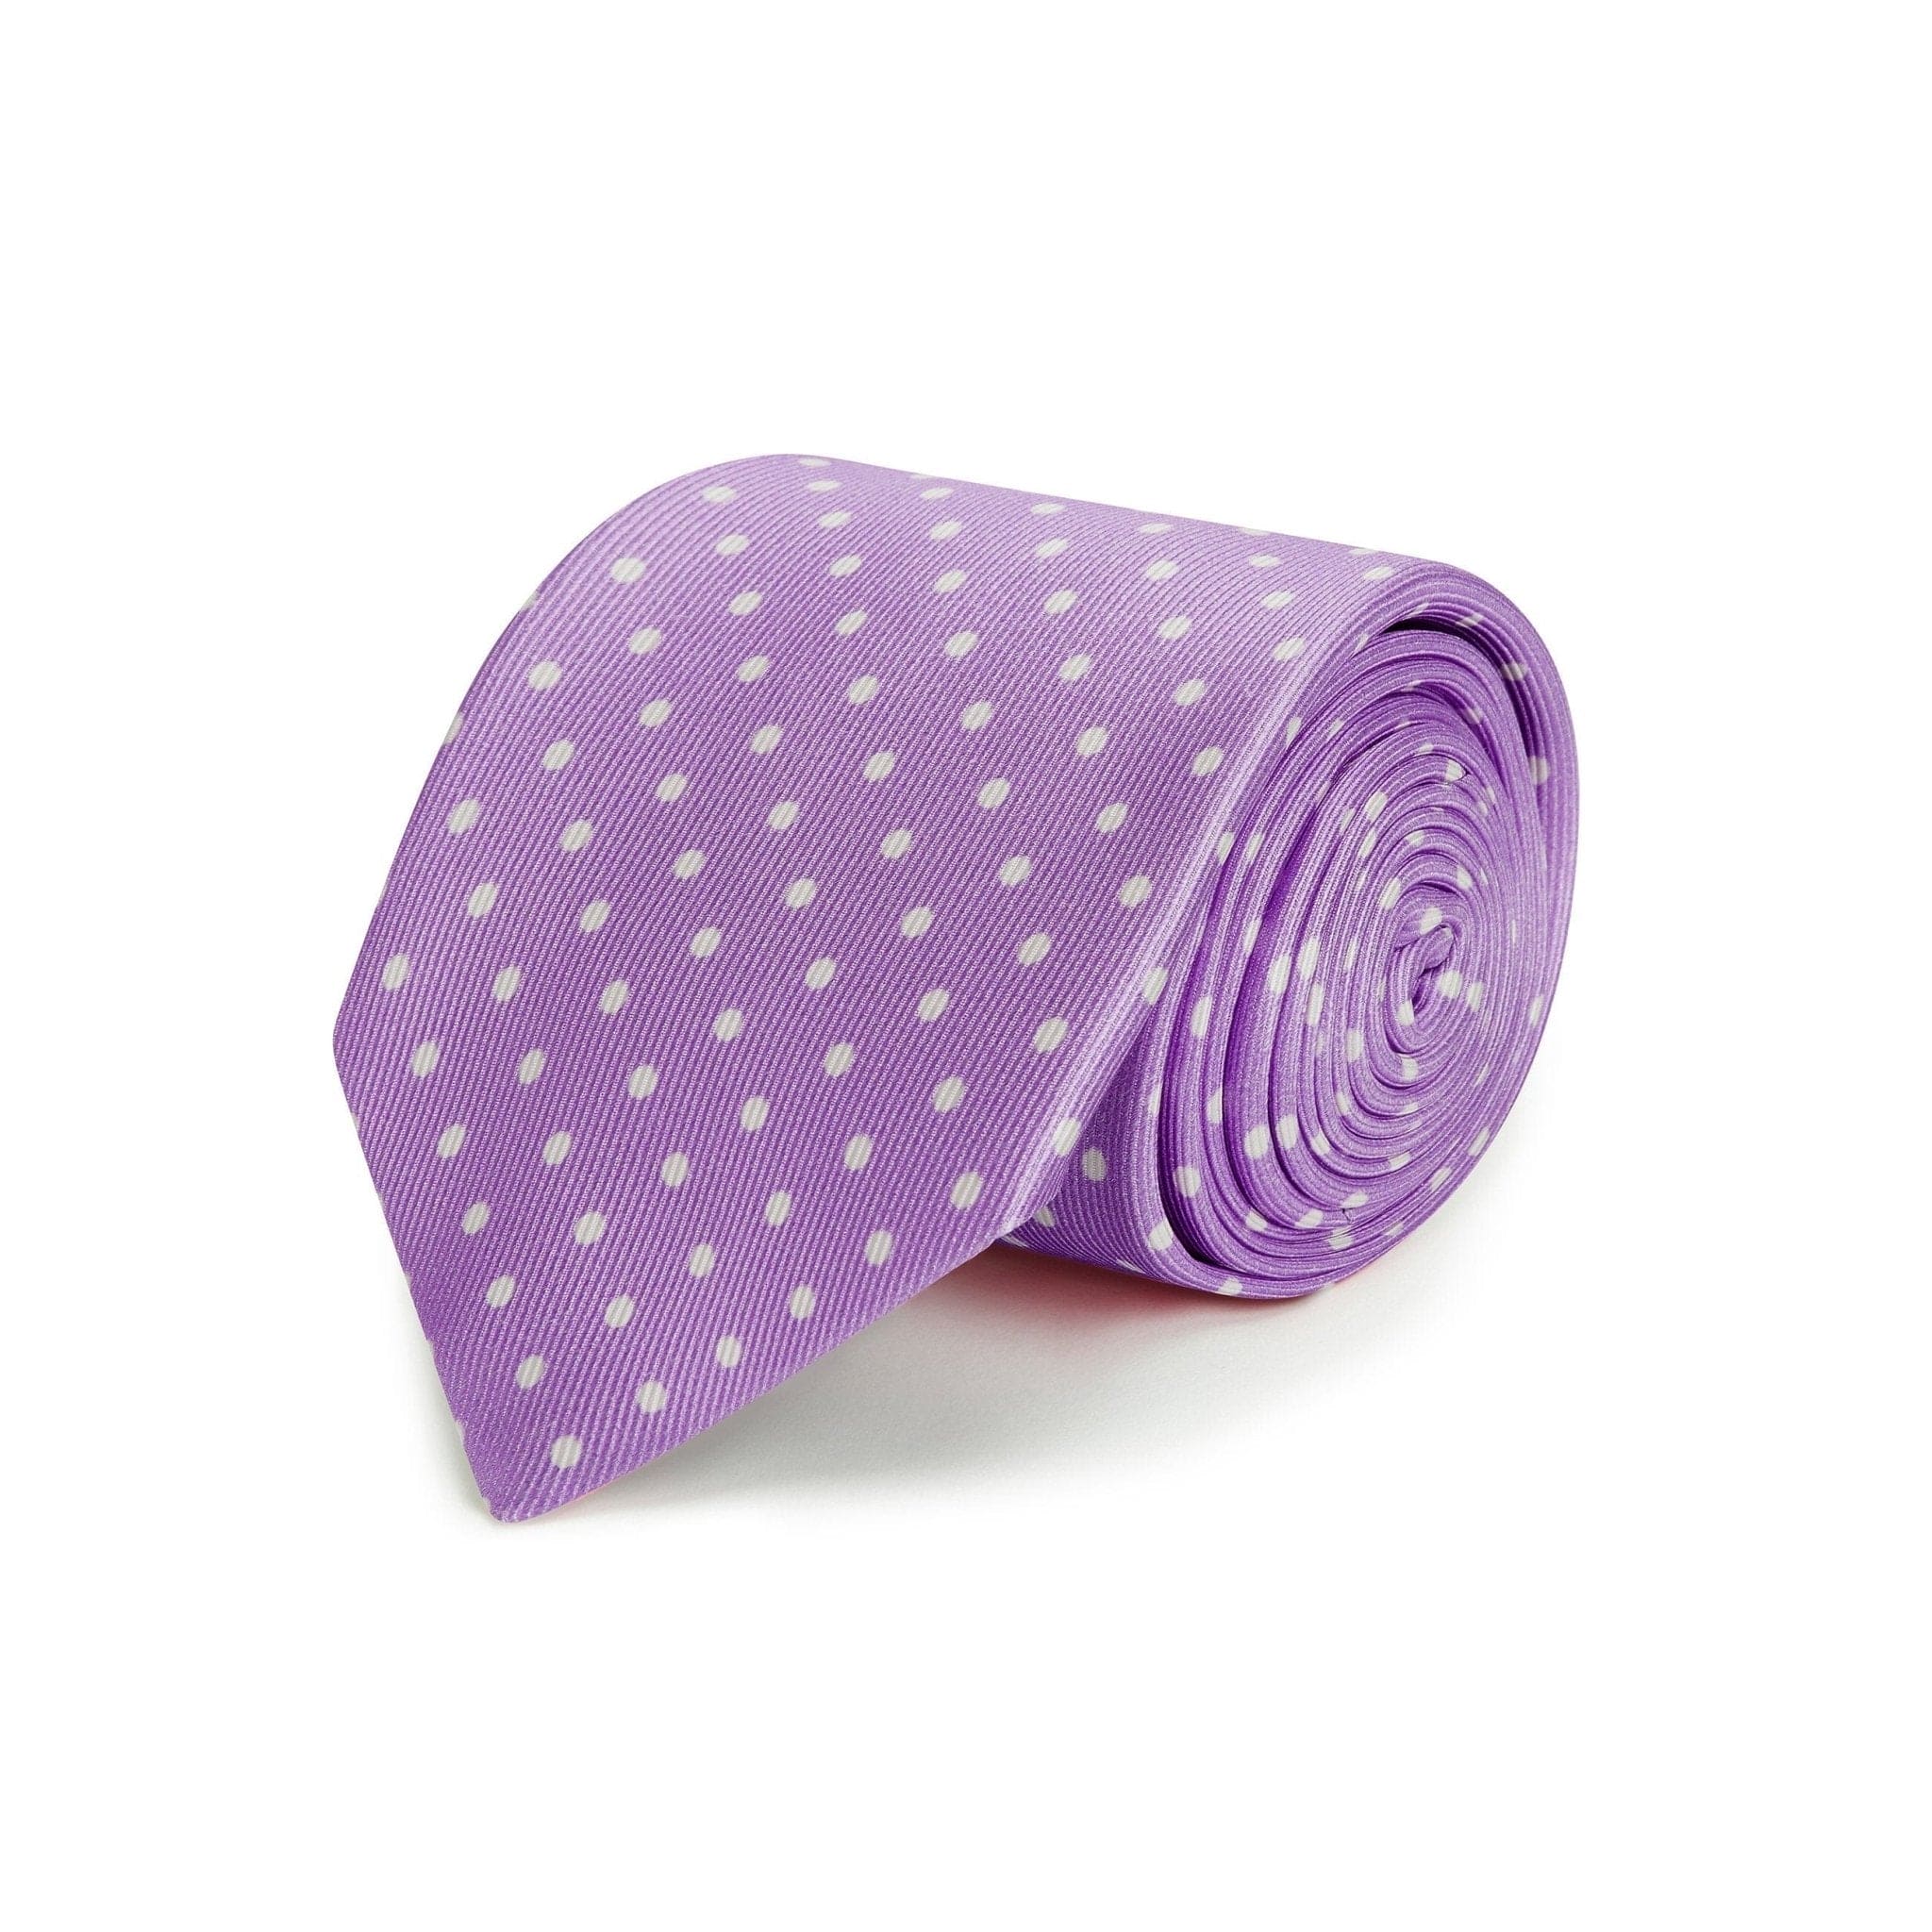 Lilac Printed Silk Tie with White Medium Spots